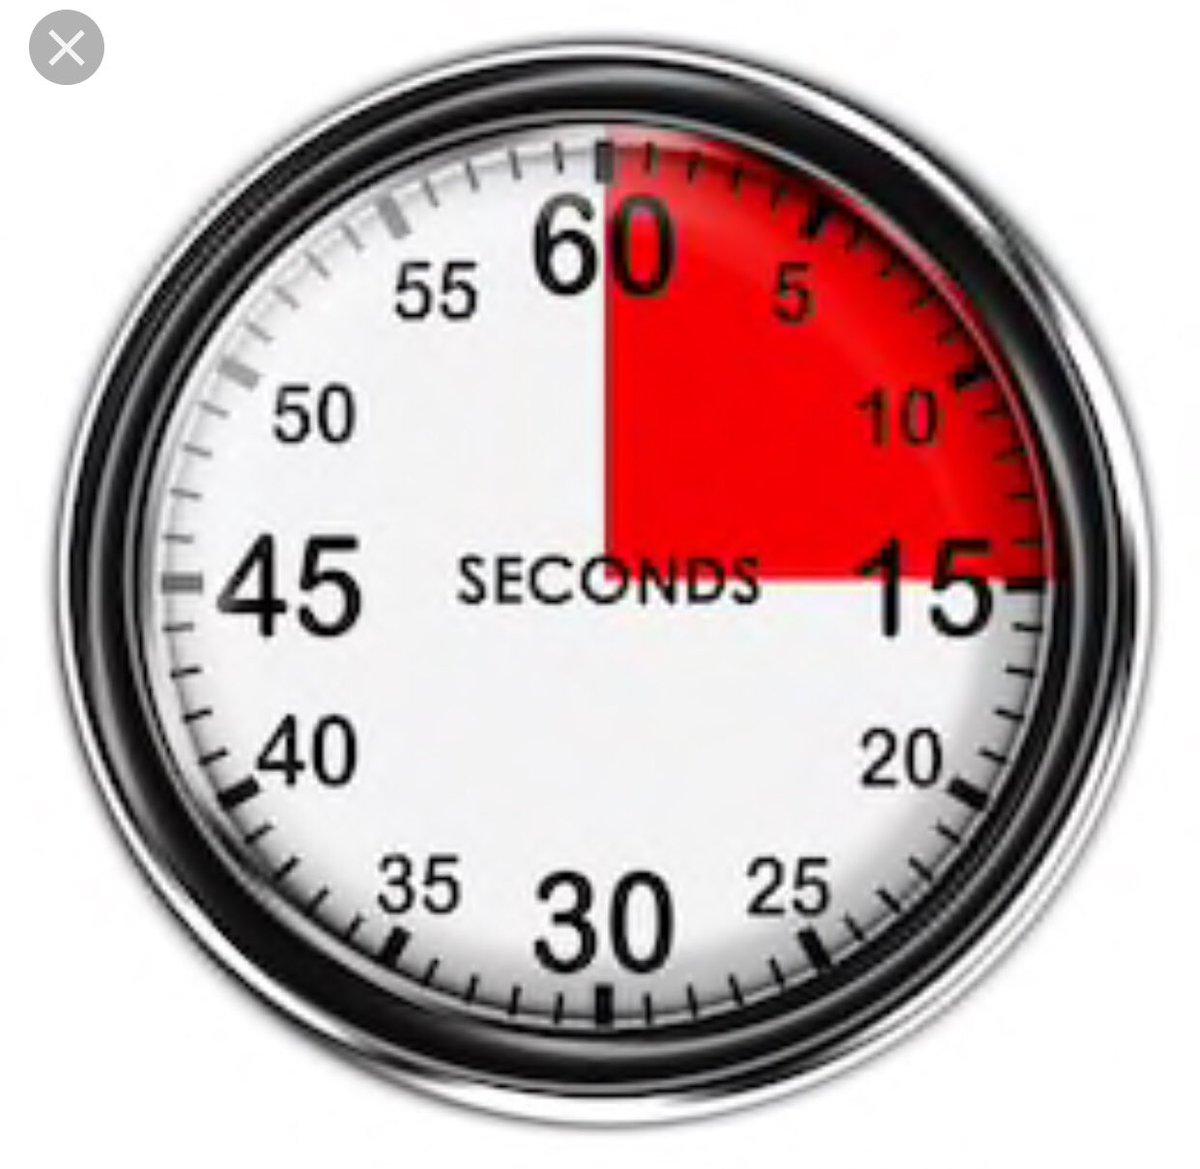 Таймер 15 секунд. Секундомер 15 минут. Часы 15 секунд. Таймер 15 секунд гиф.